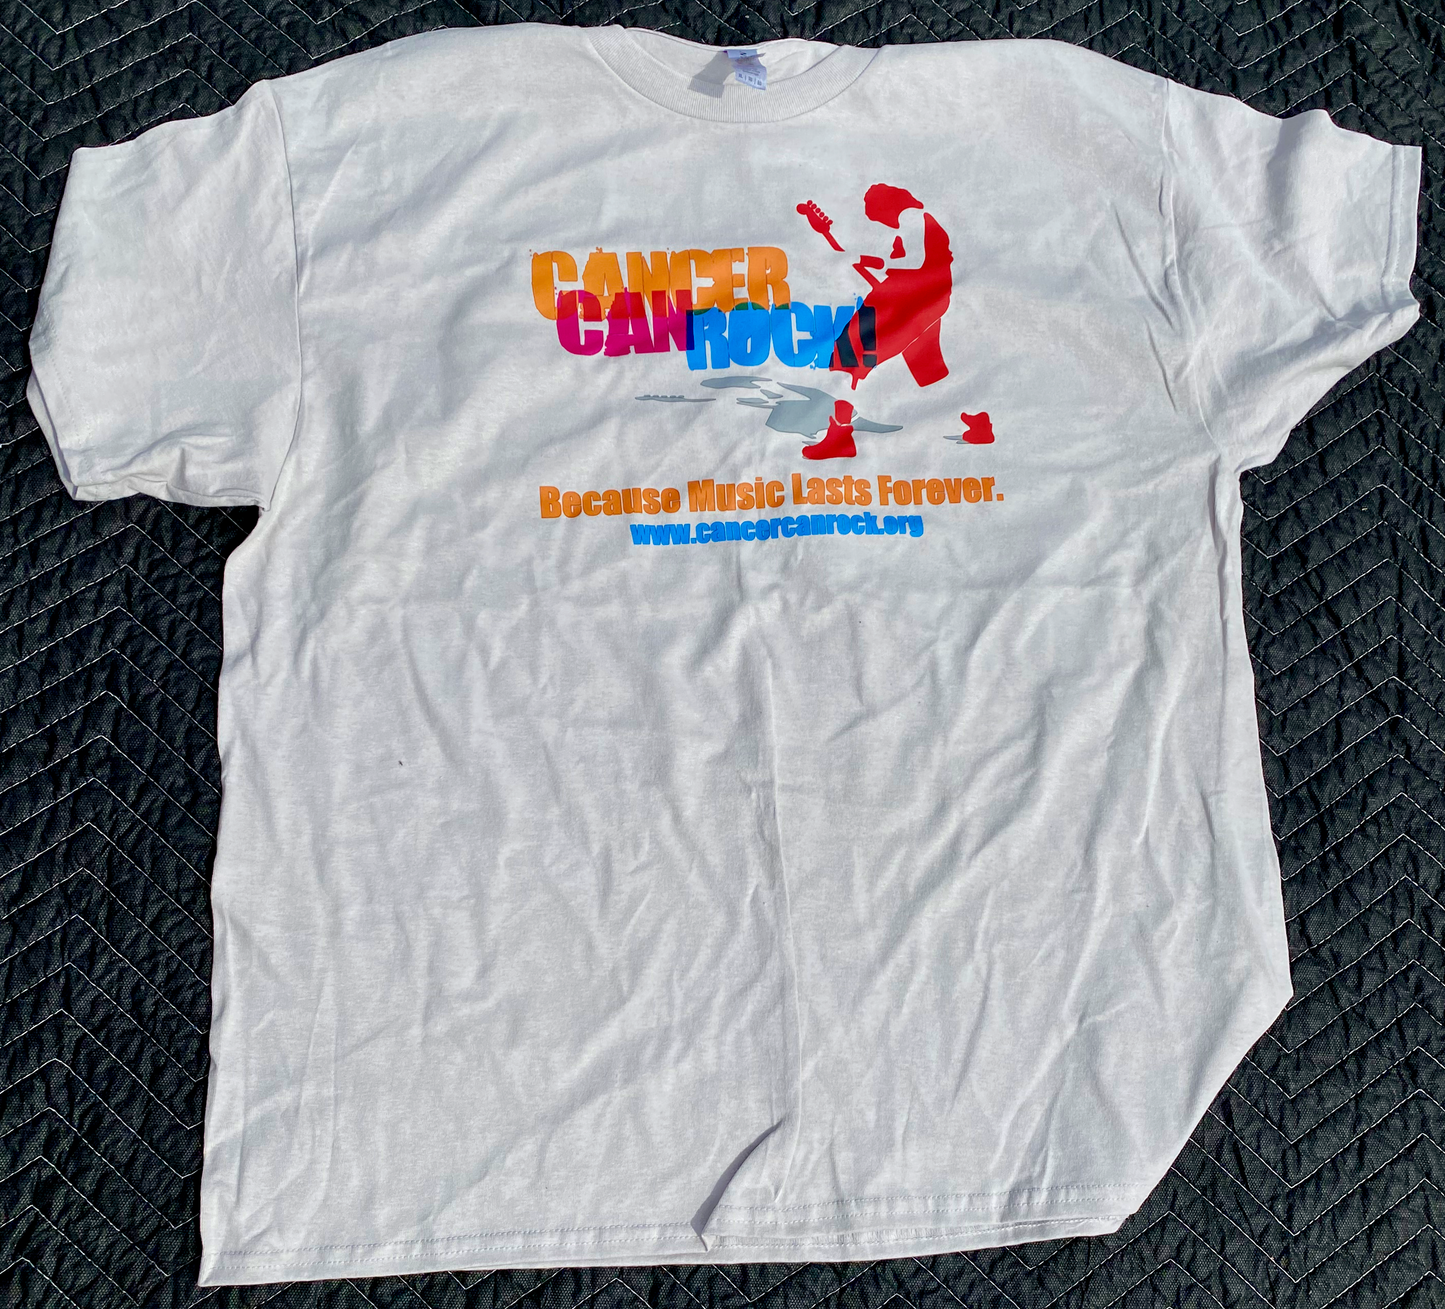 Clothing - T-Shirt - Unisex - CCR Logo - Cotton